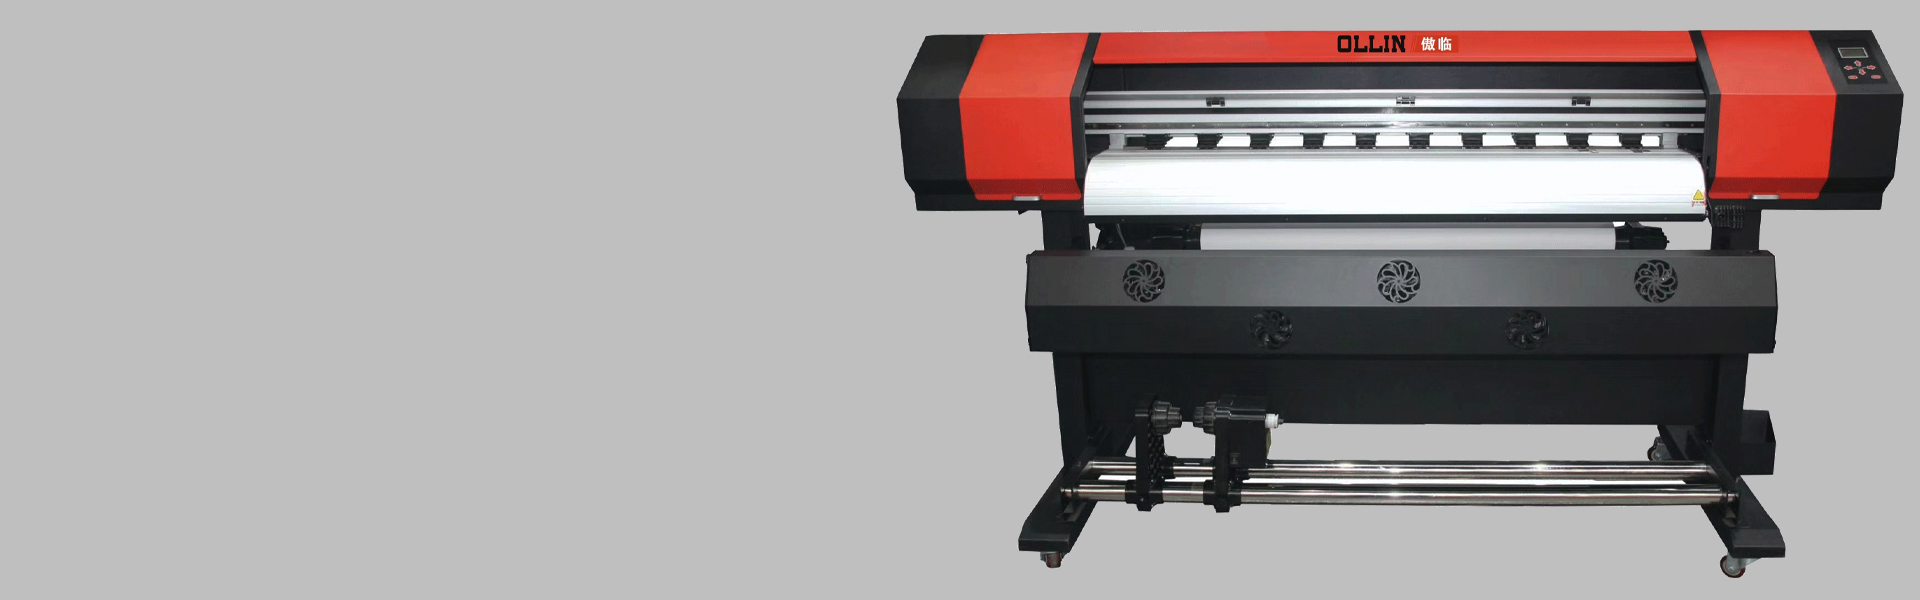 best sublimation printer